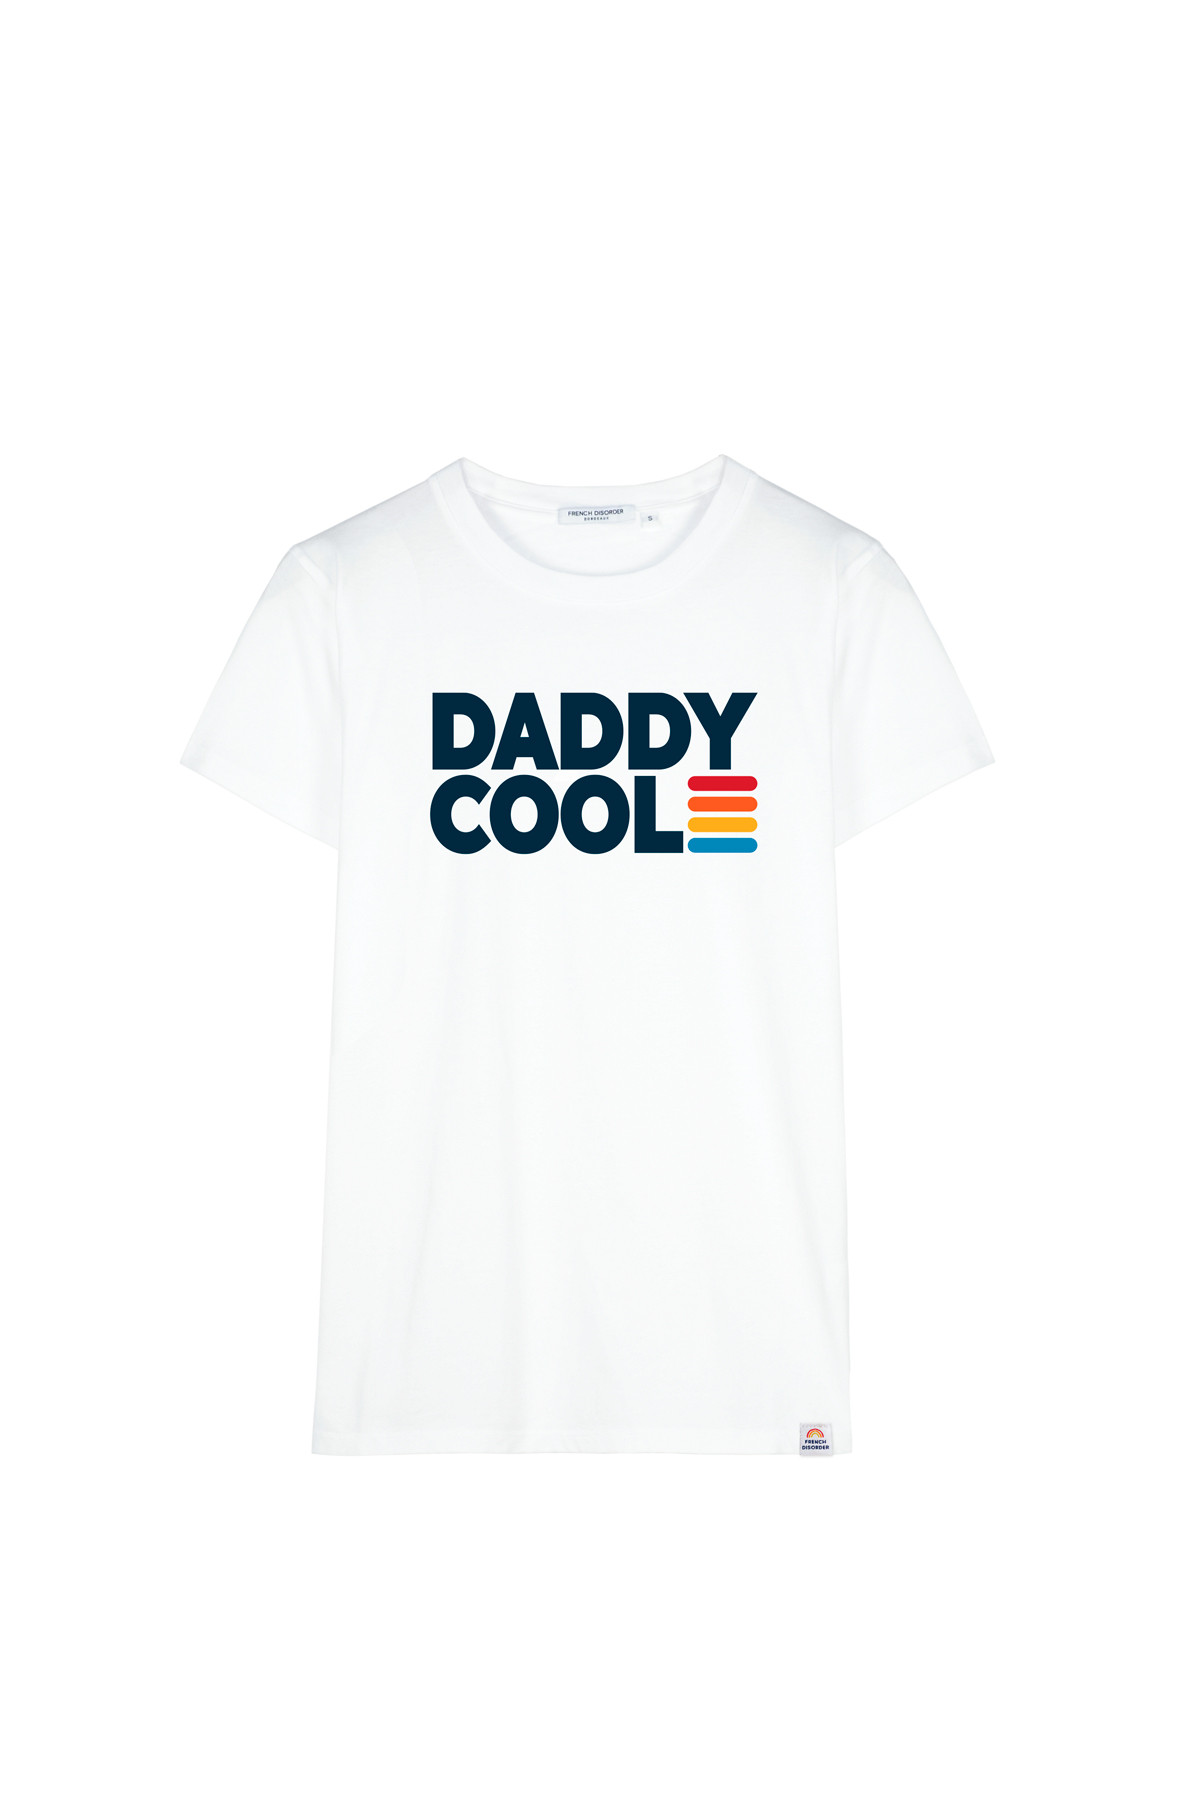 Tshirt DADDY COOL French Disorder